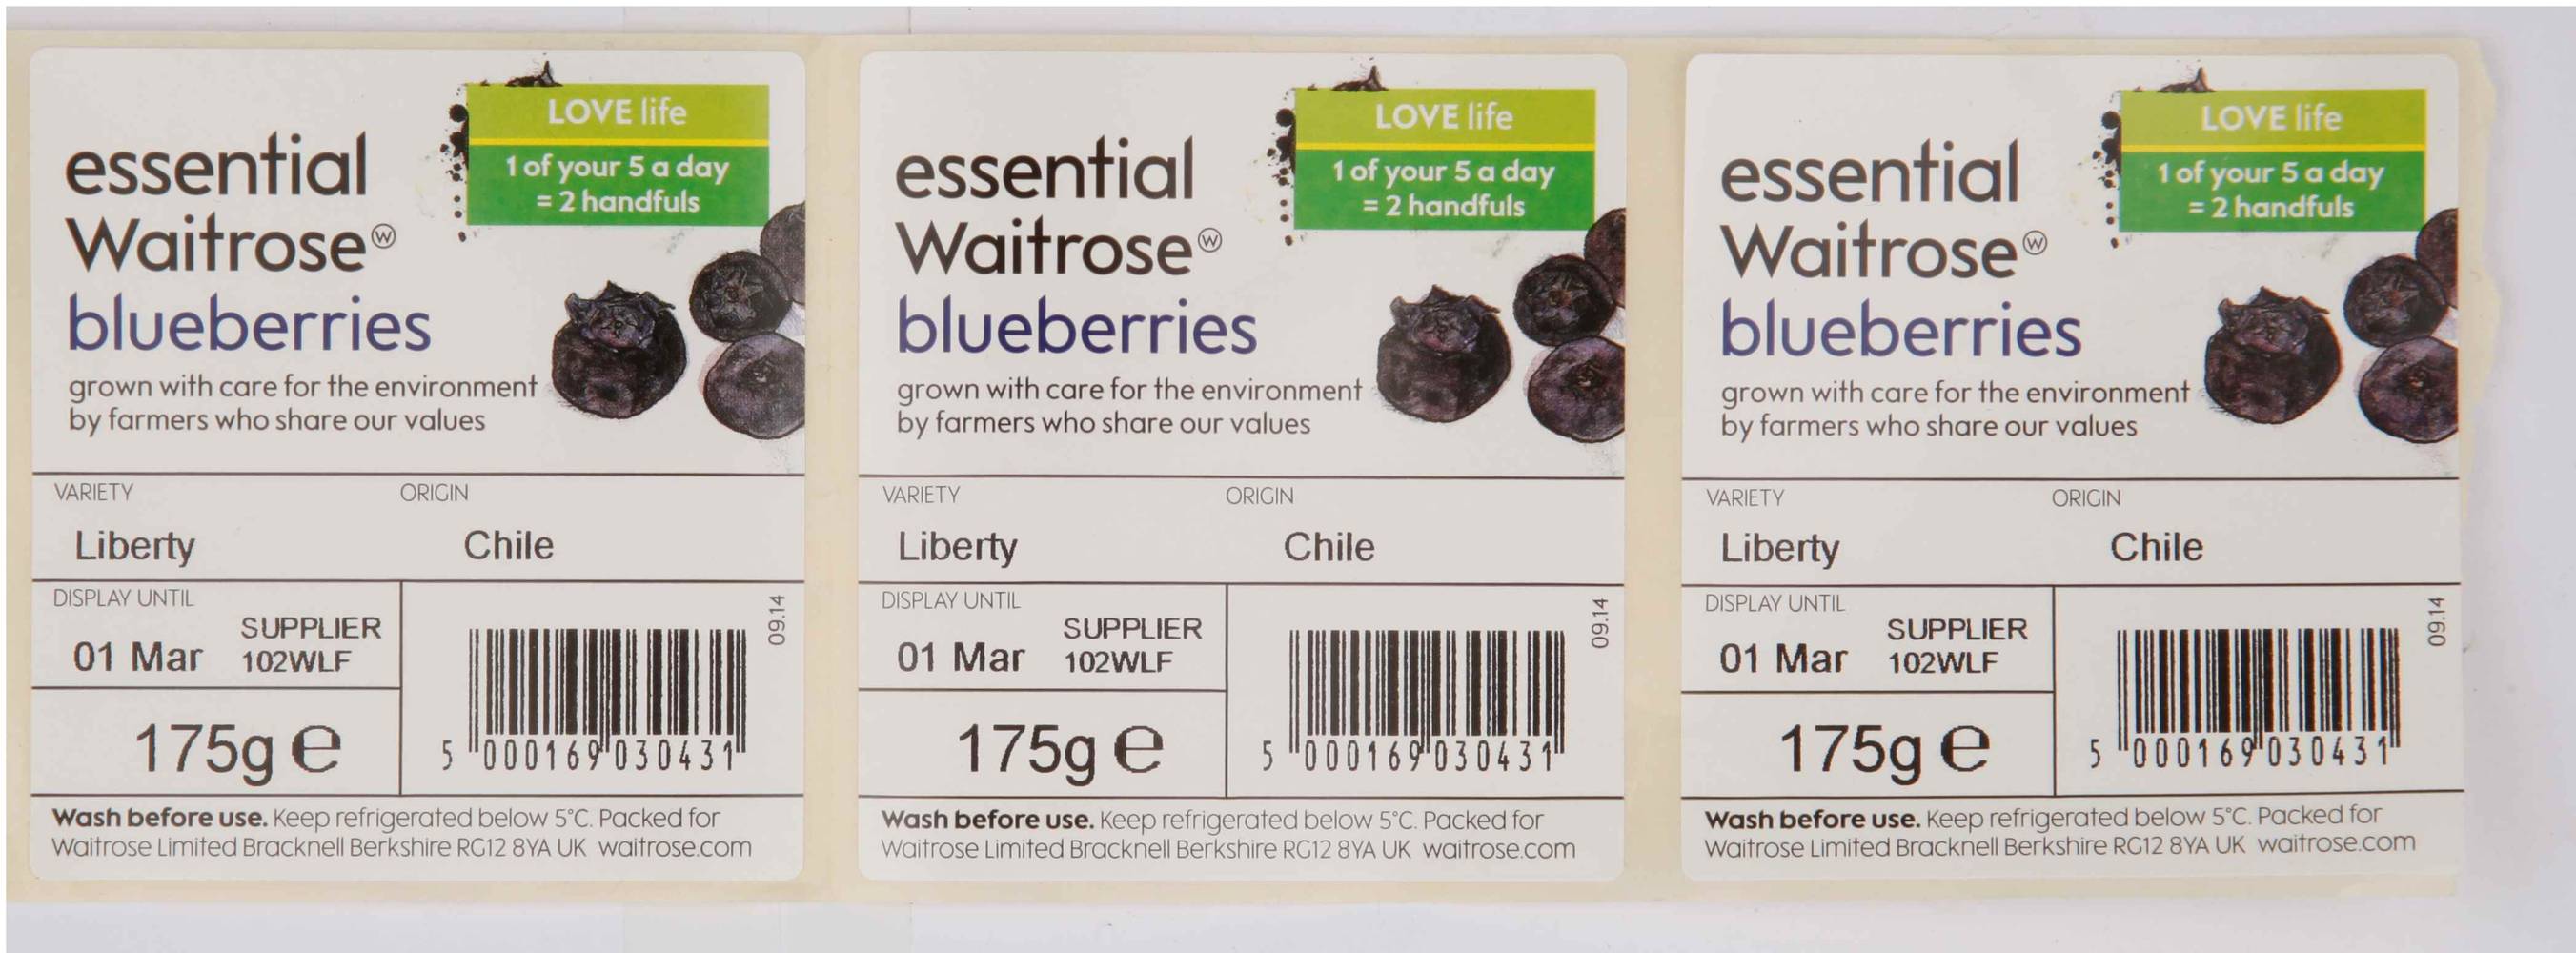 Essential Waitrose Blueberries